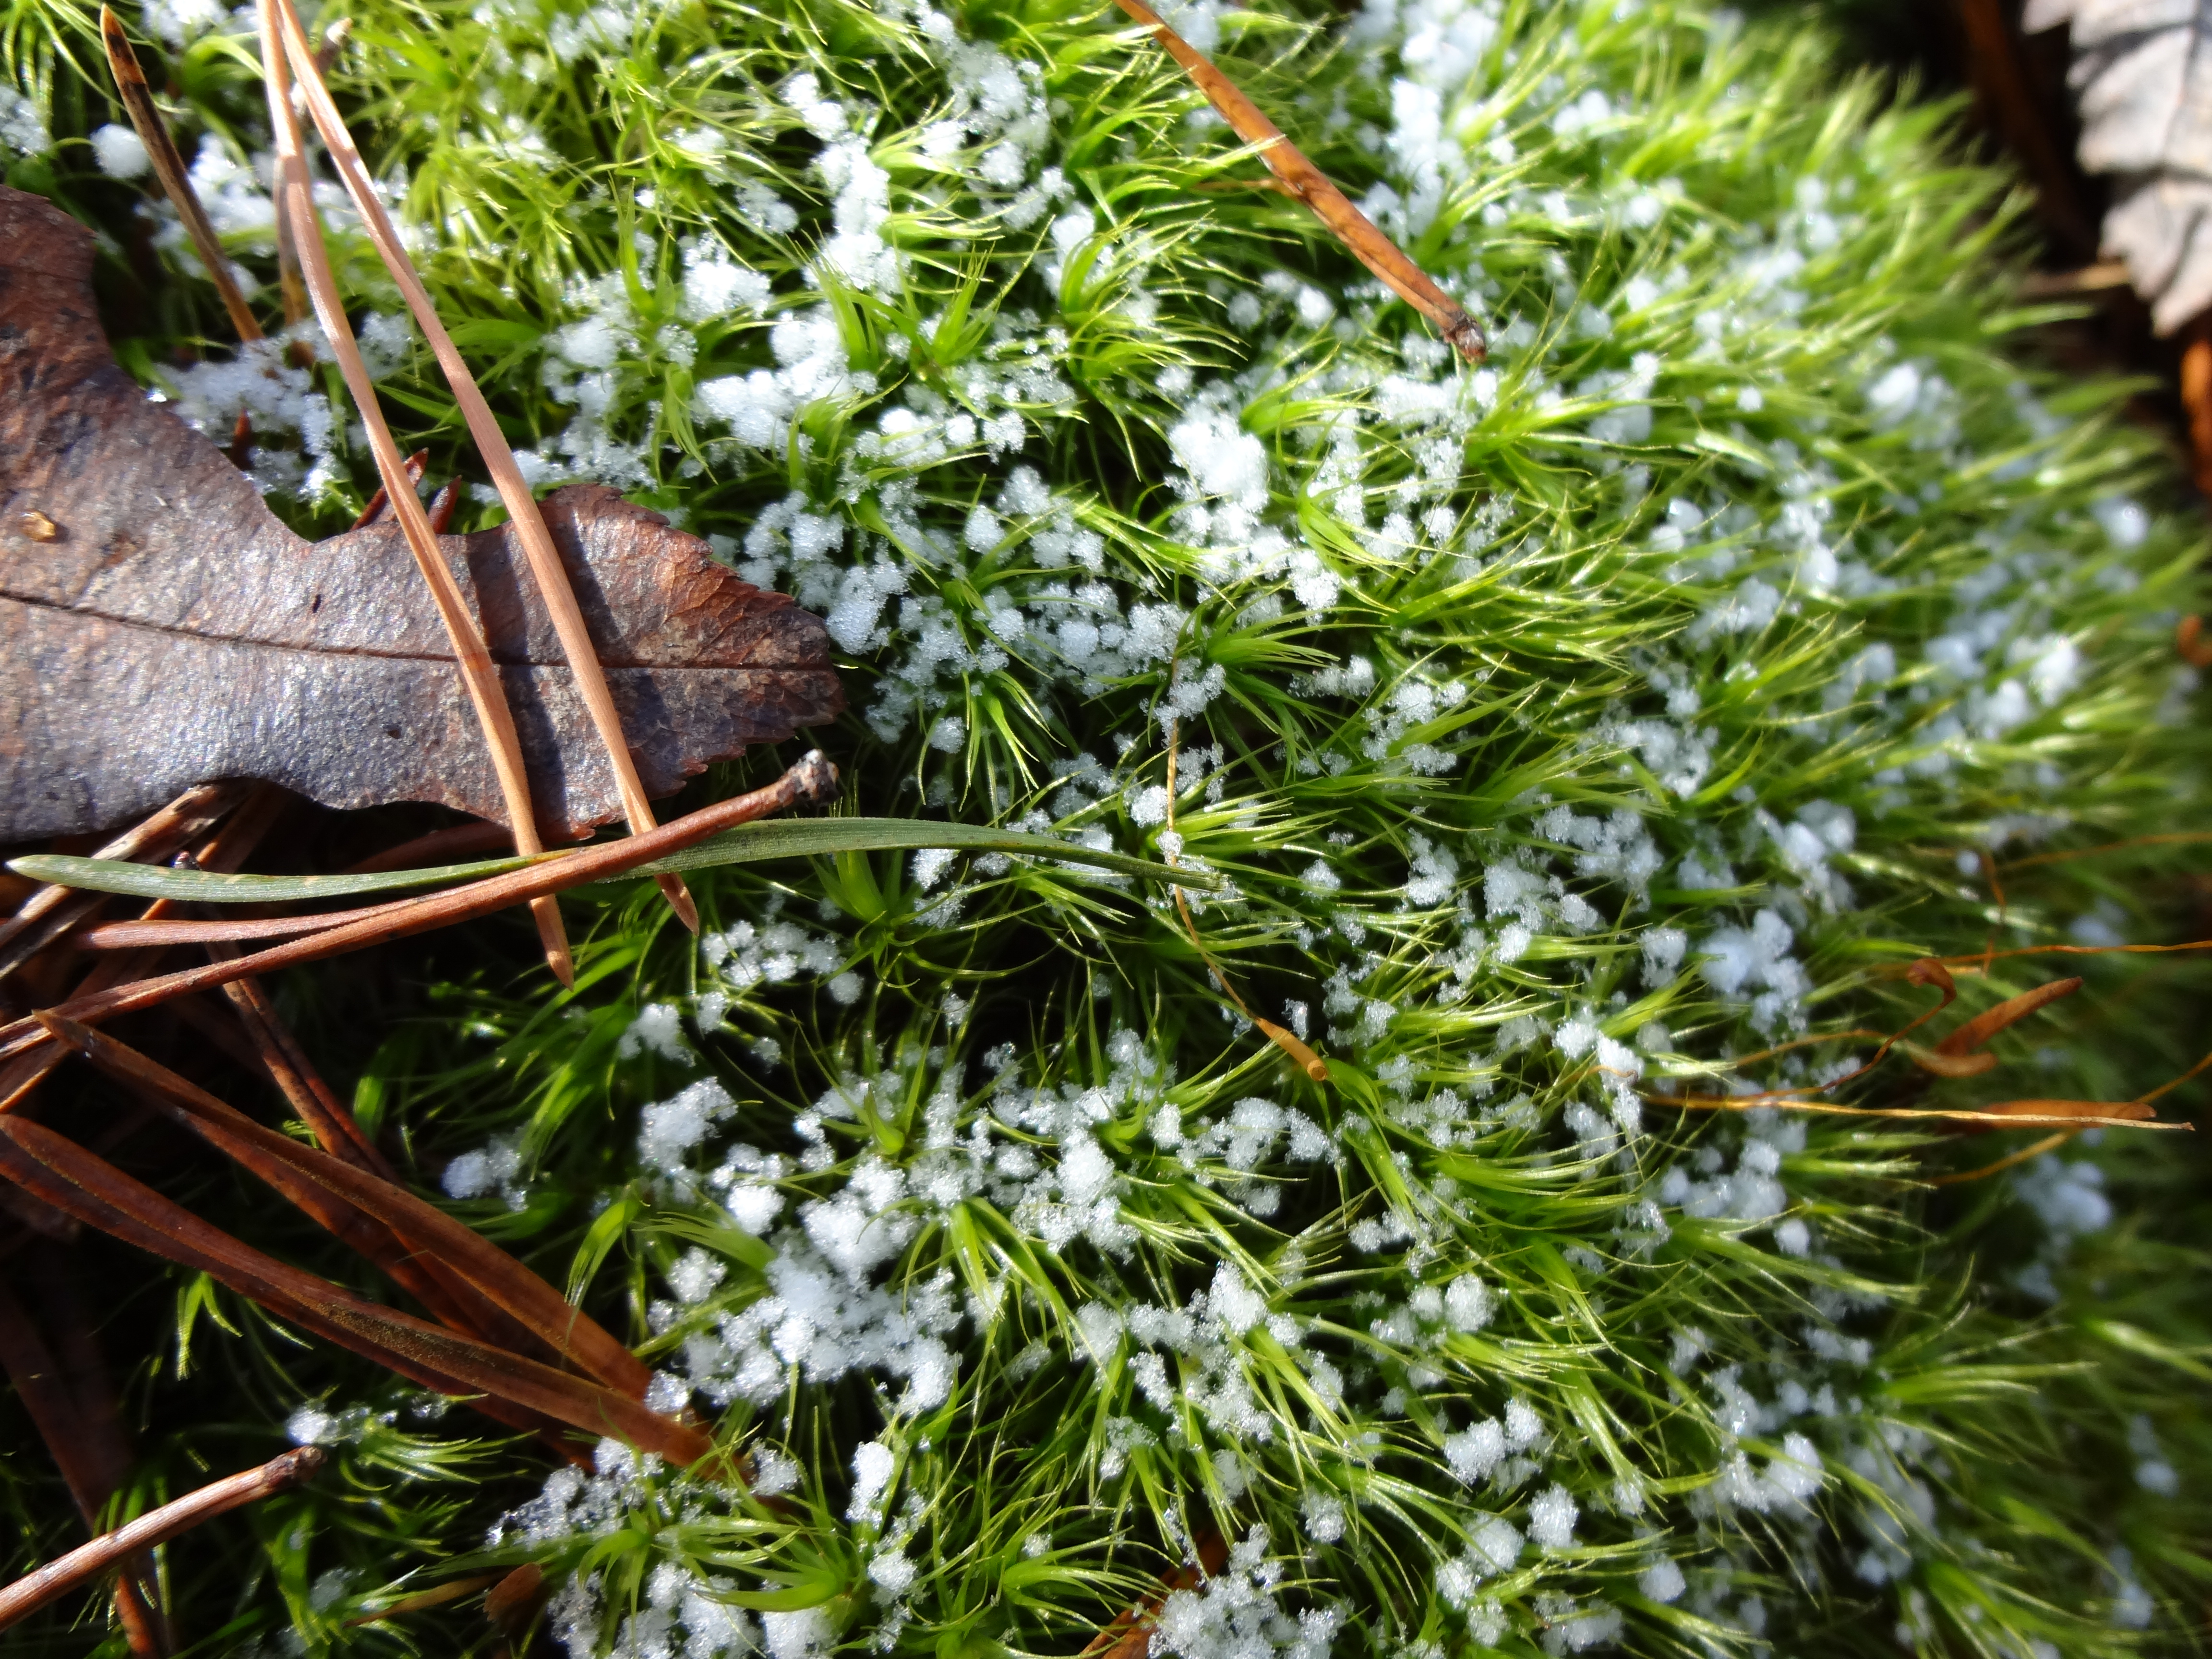 snow on moss